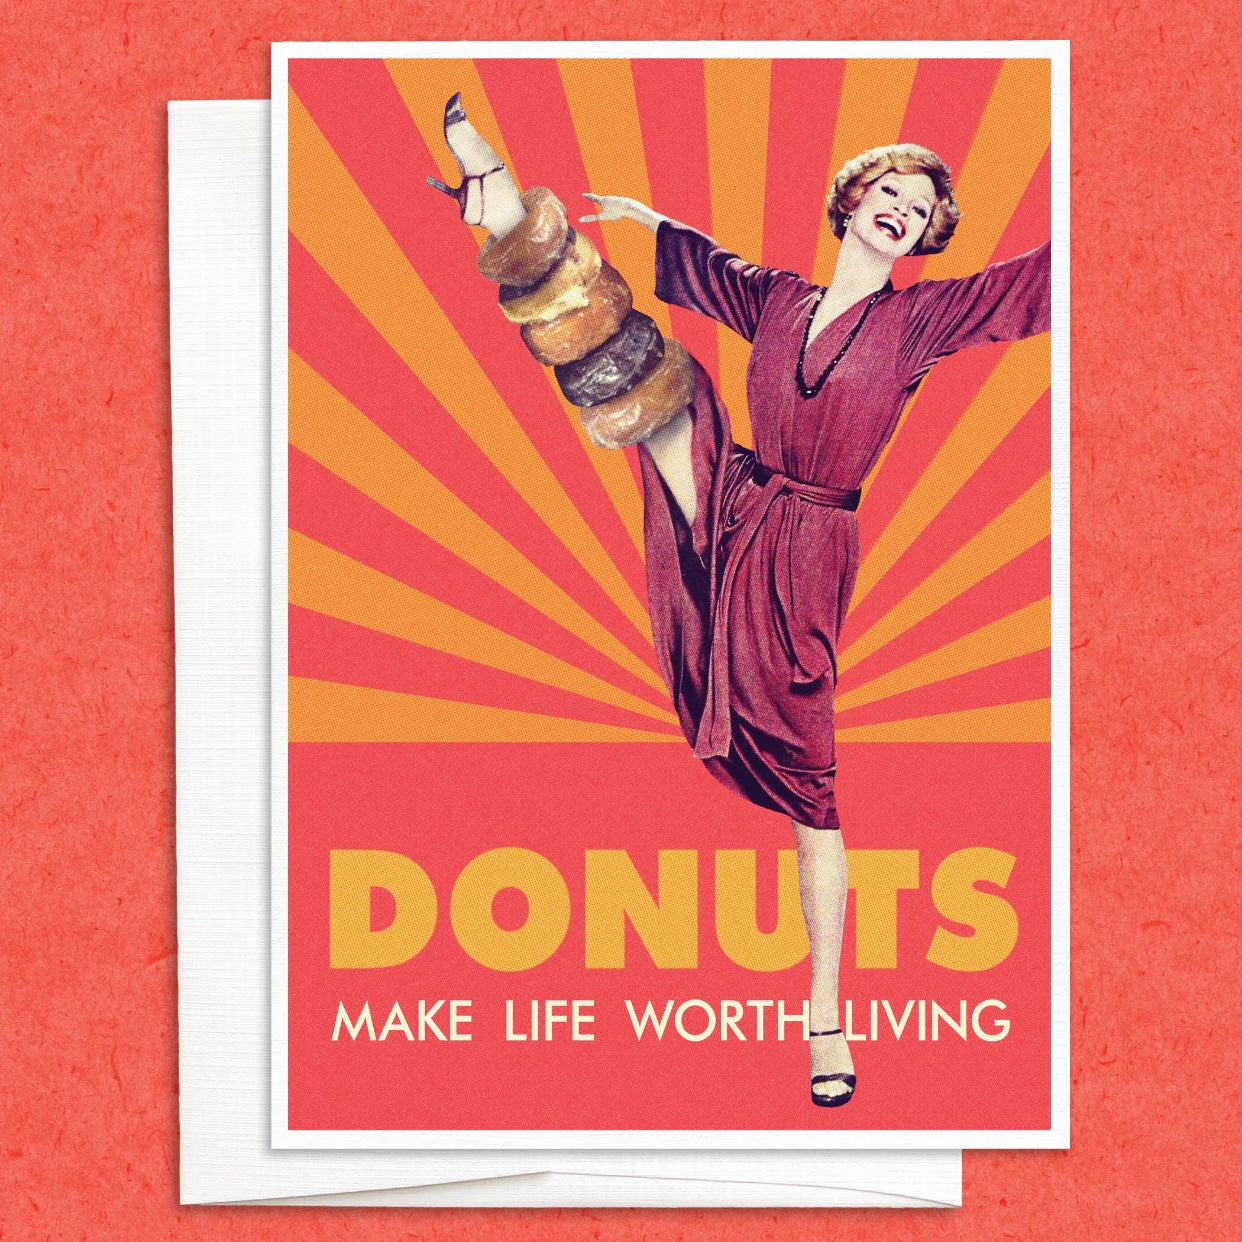 Donuts make life worth living greeting card